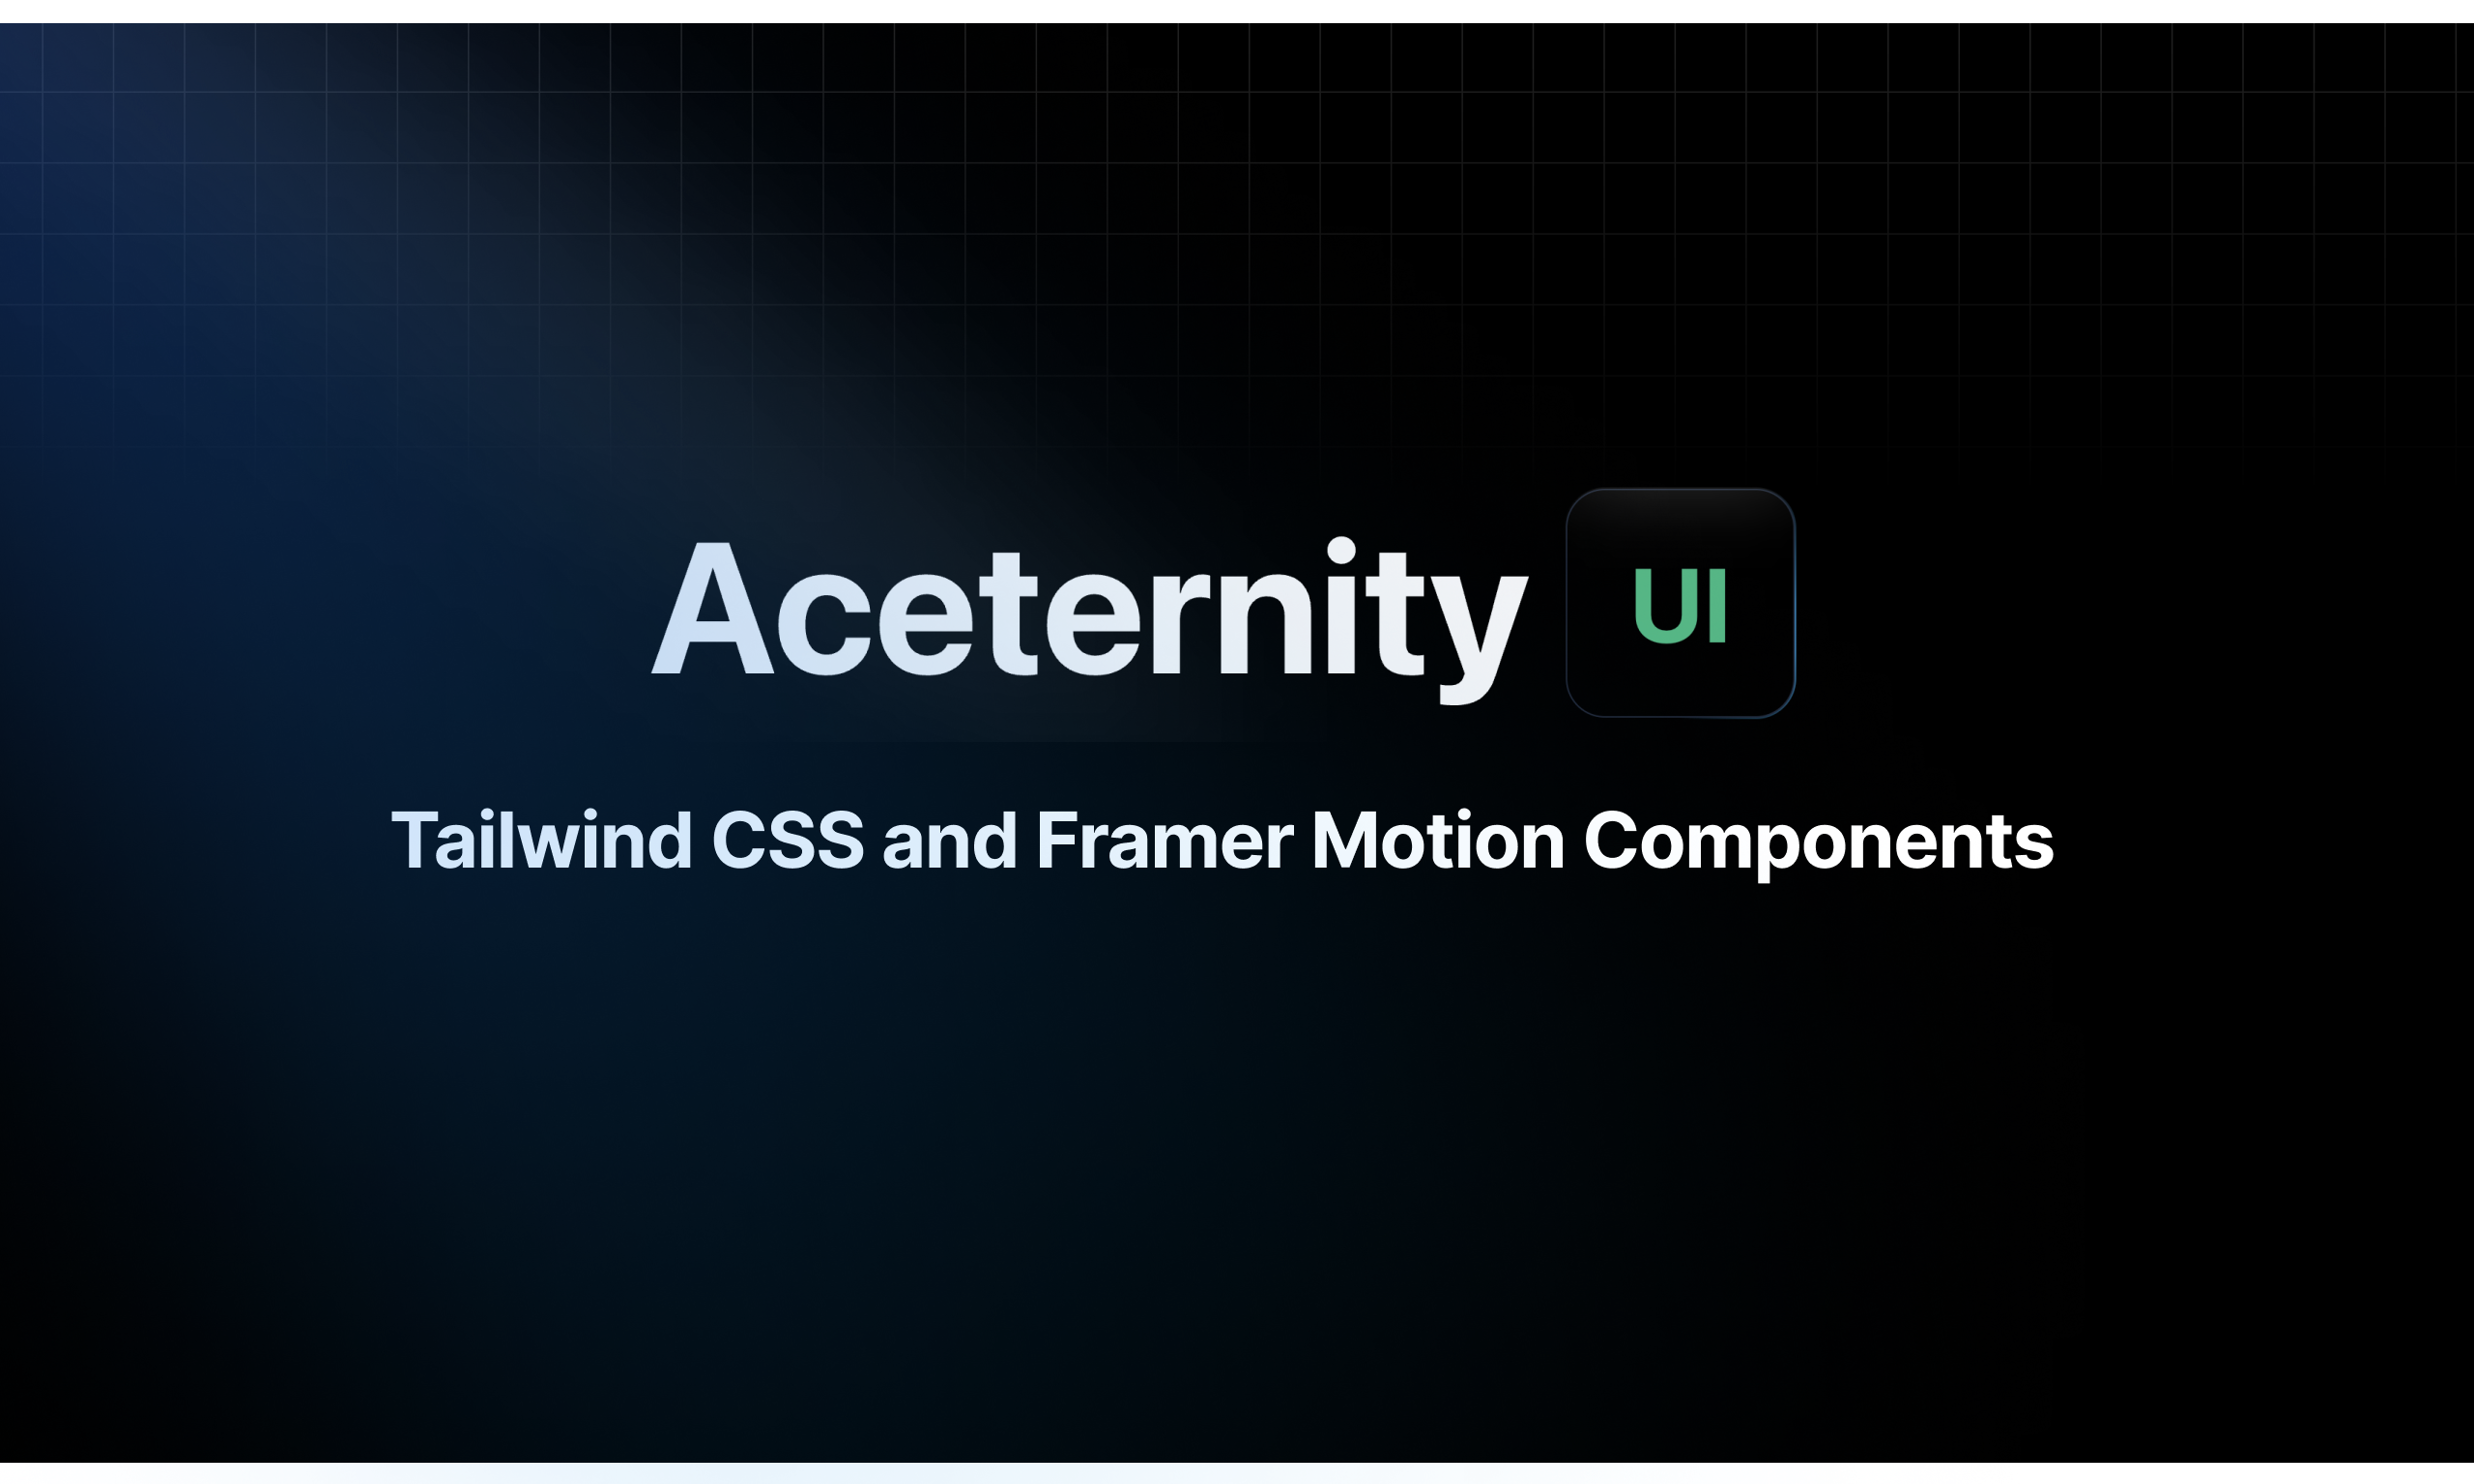 Aceternity UI